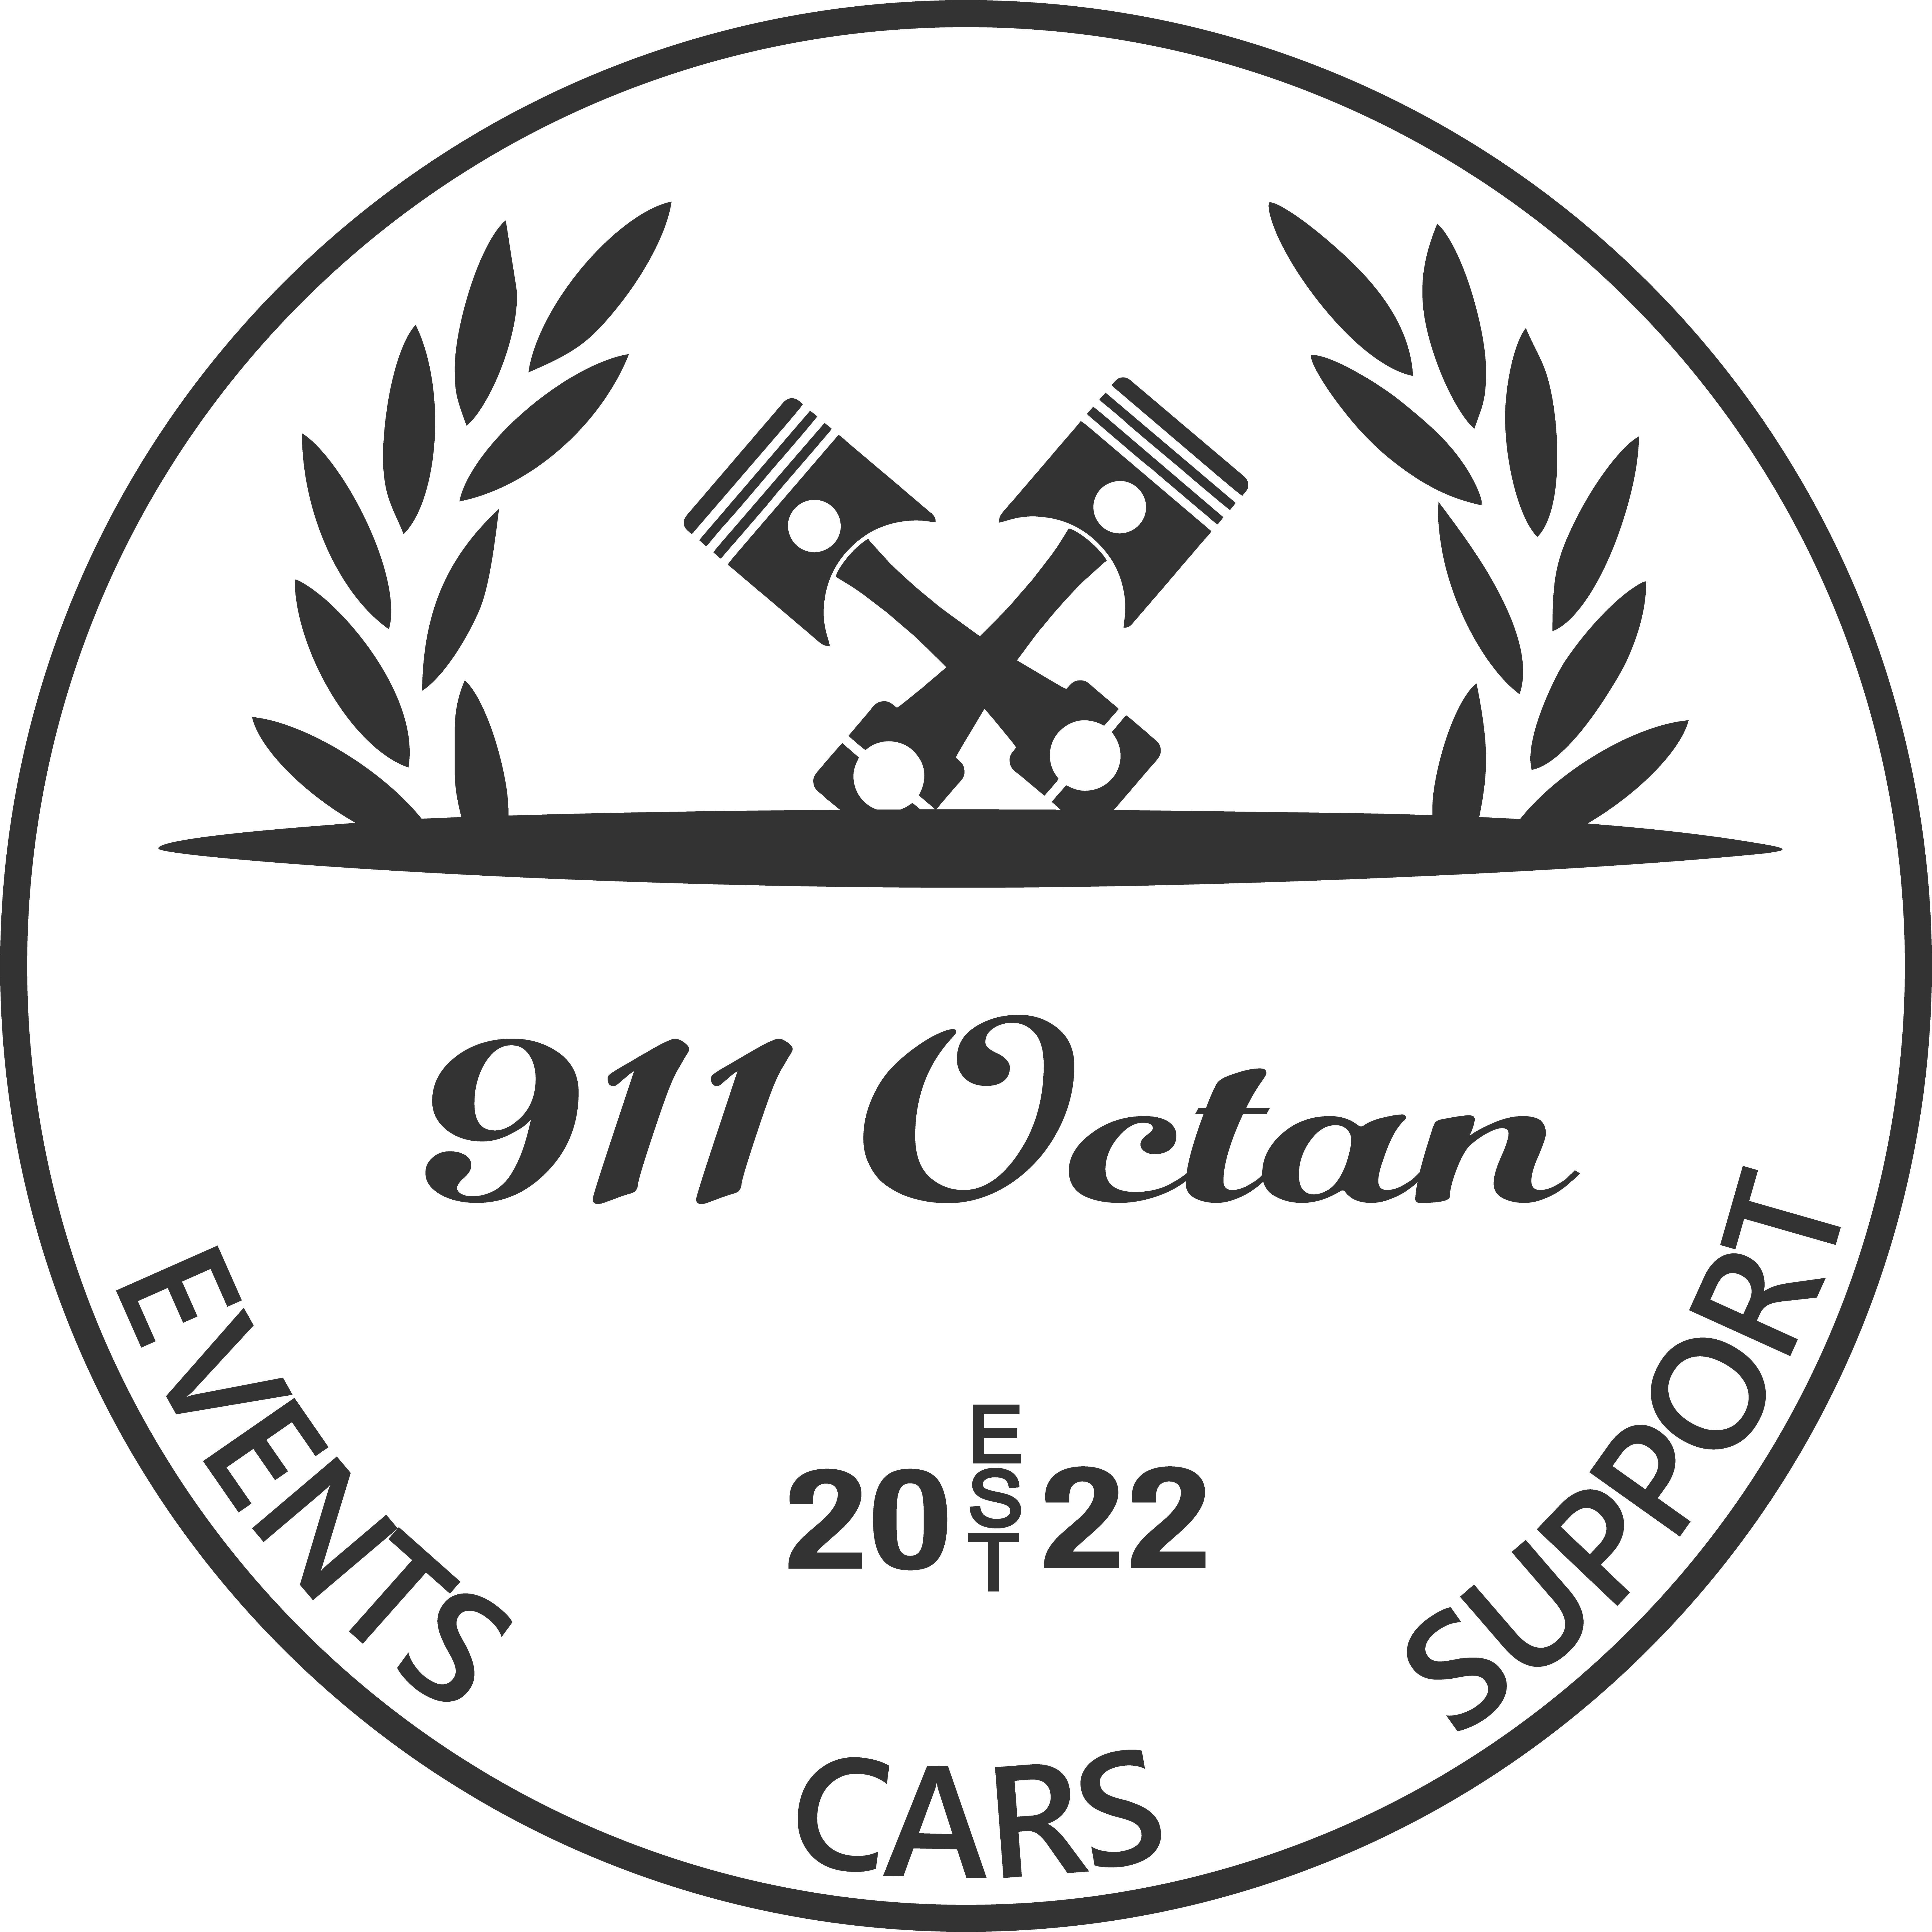 Logo der 911 Octan Anstalt